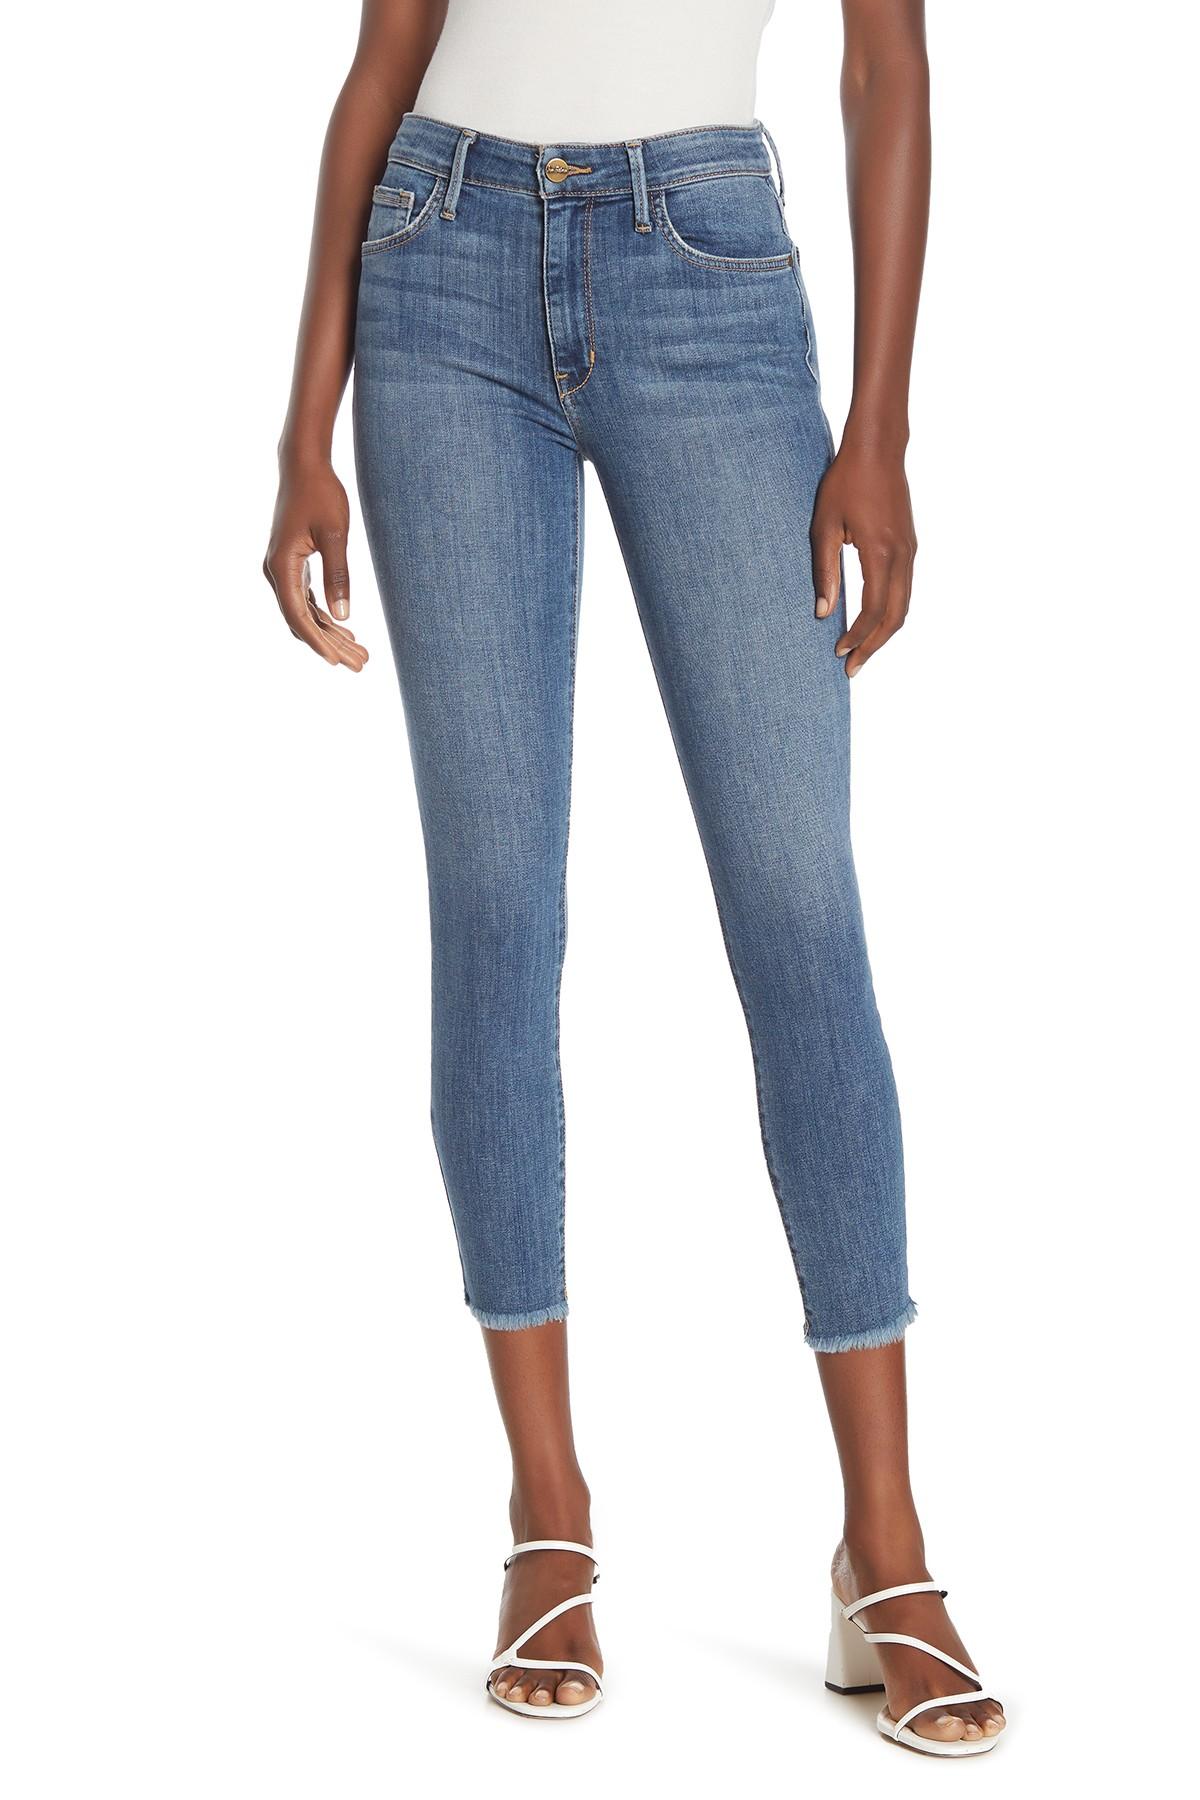 Sam Edelman Denim The Stiletto Frayed Hem High Rise Skinny Crop Jeans ...